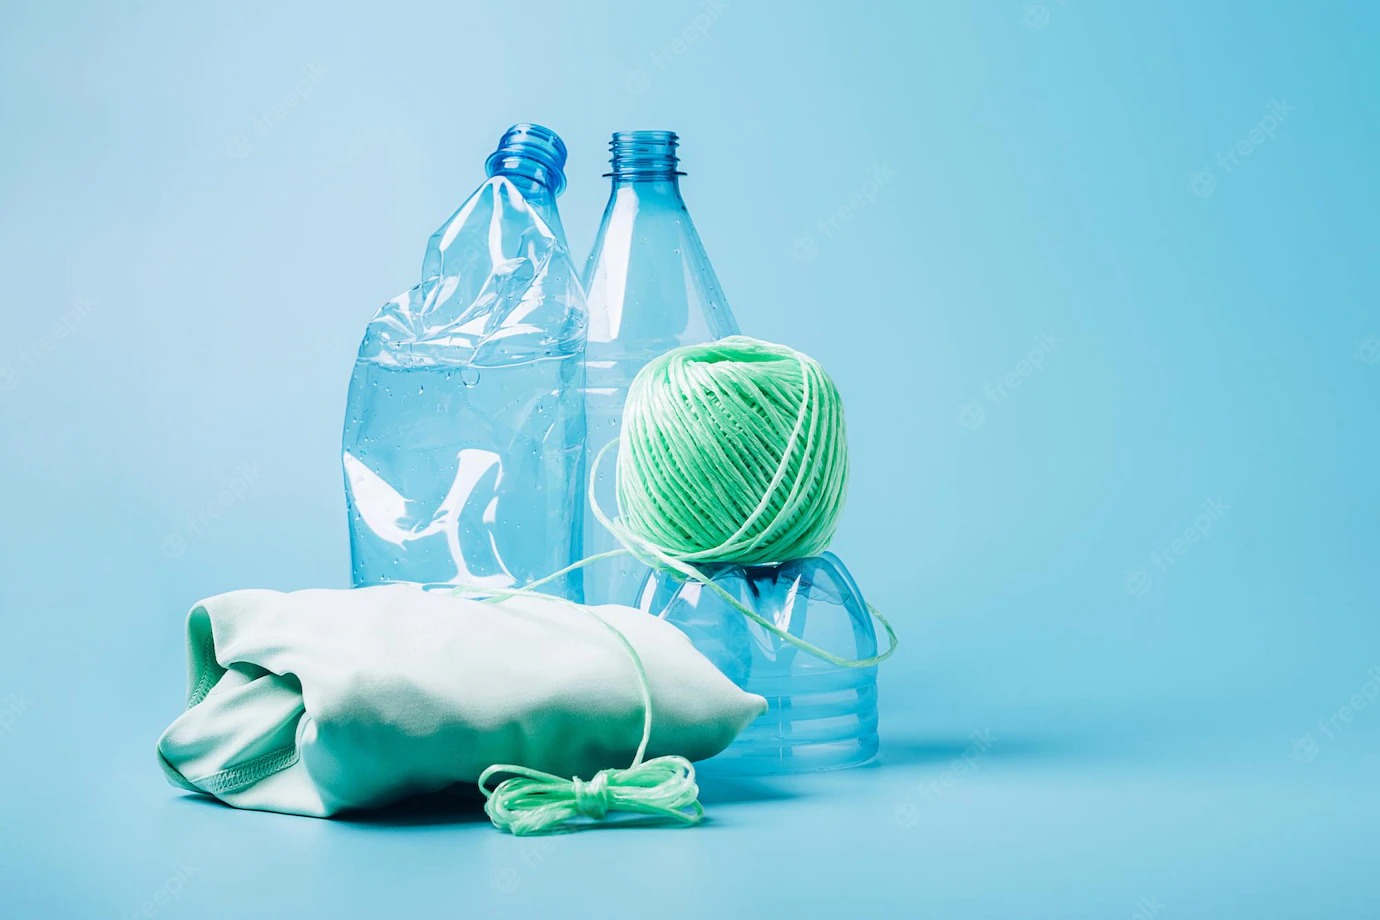 From fibre to fibre: Polyester textiles recycling